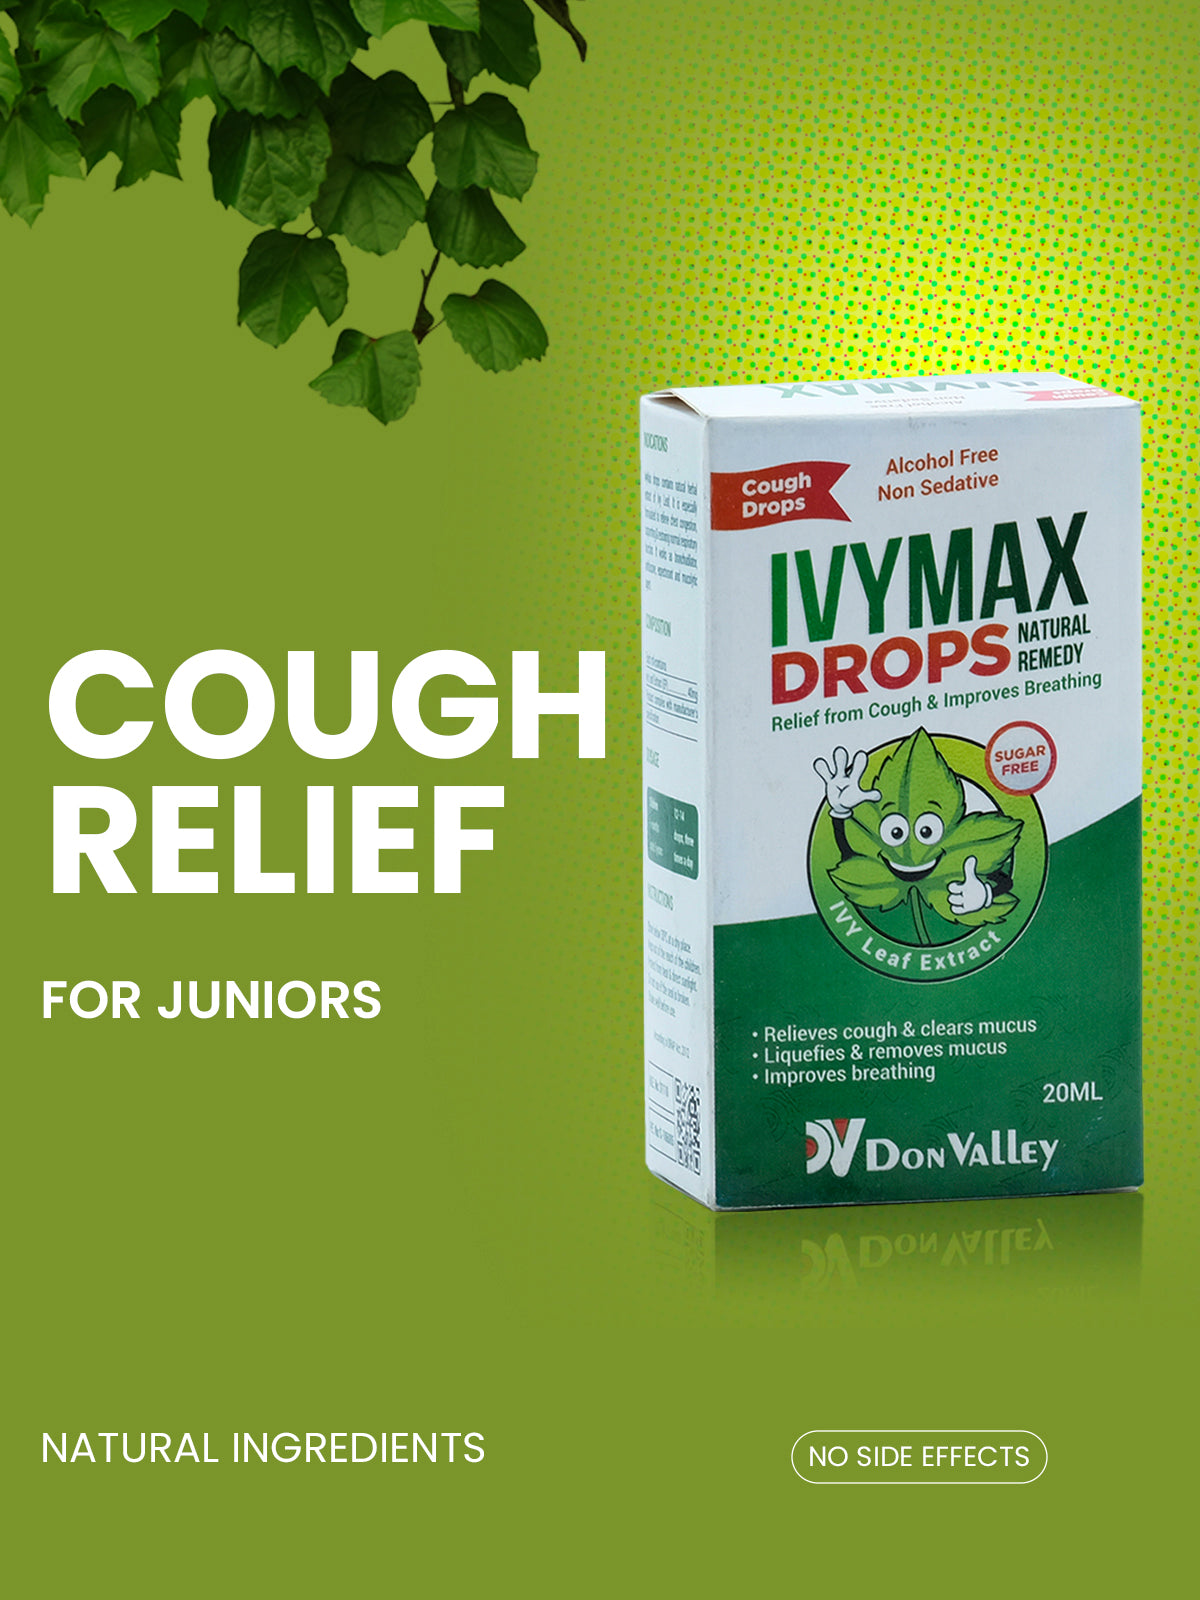 IVYMAX—Cough preparation